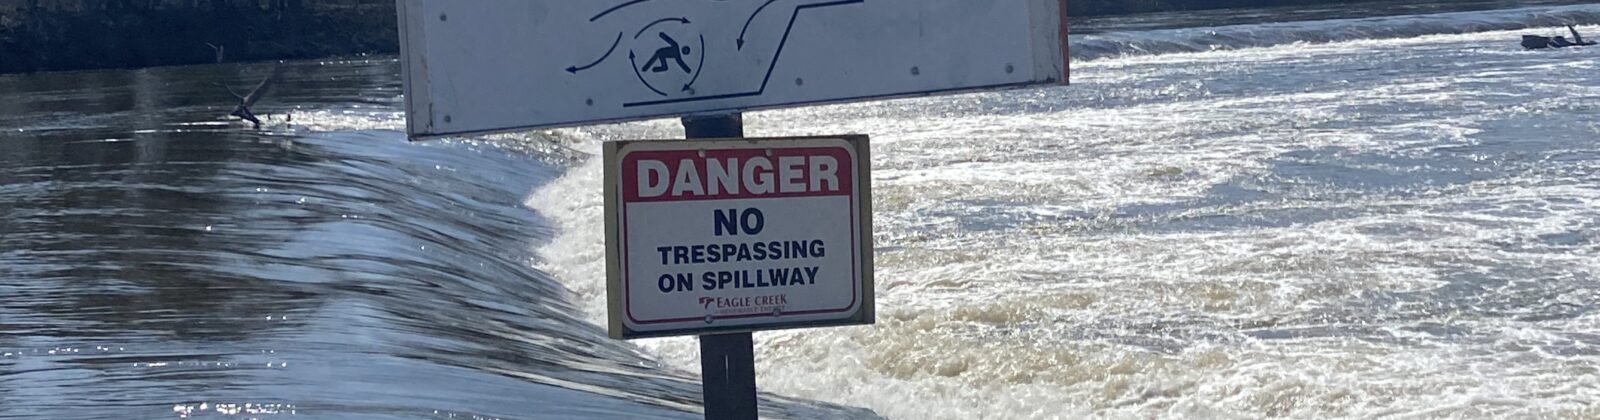 Warning sign: Danger Ahead